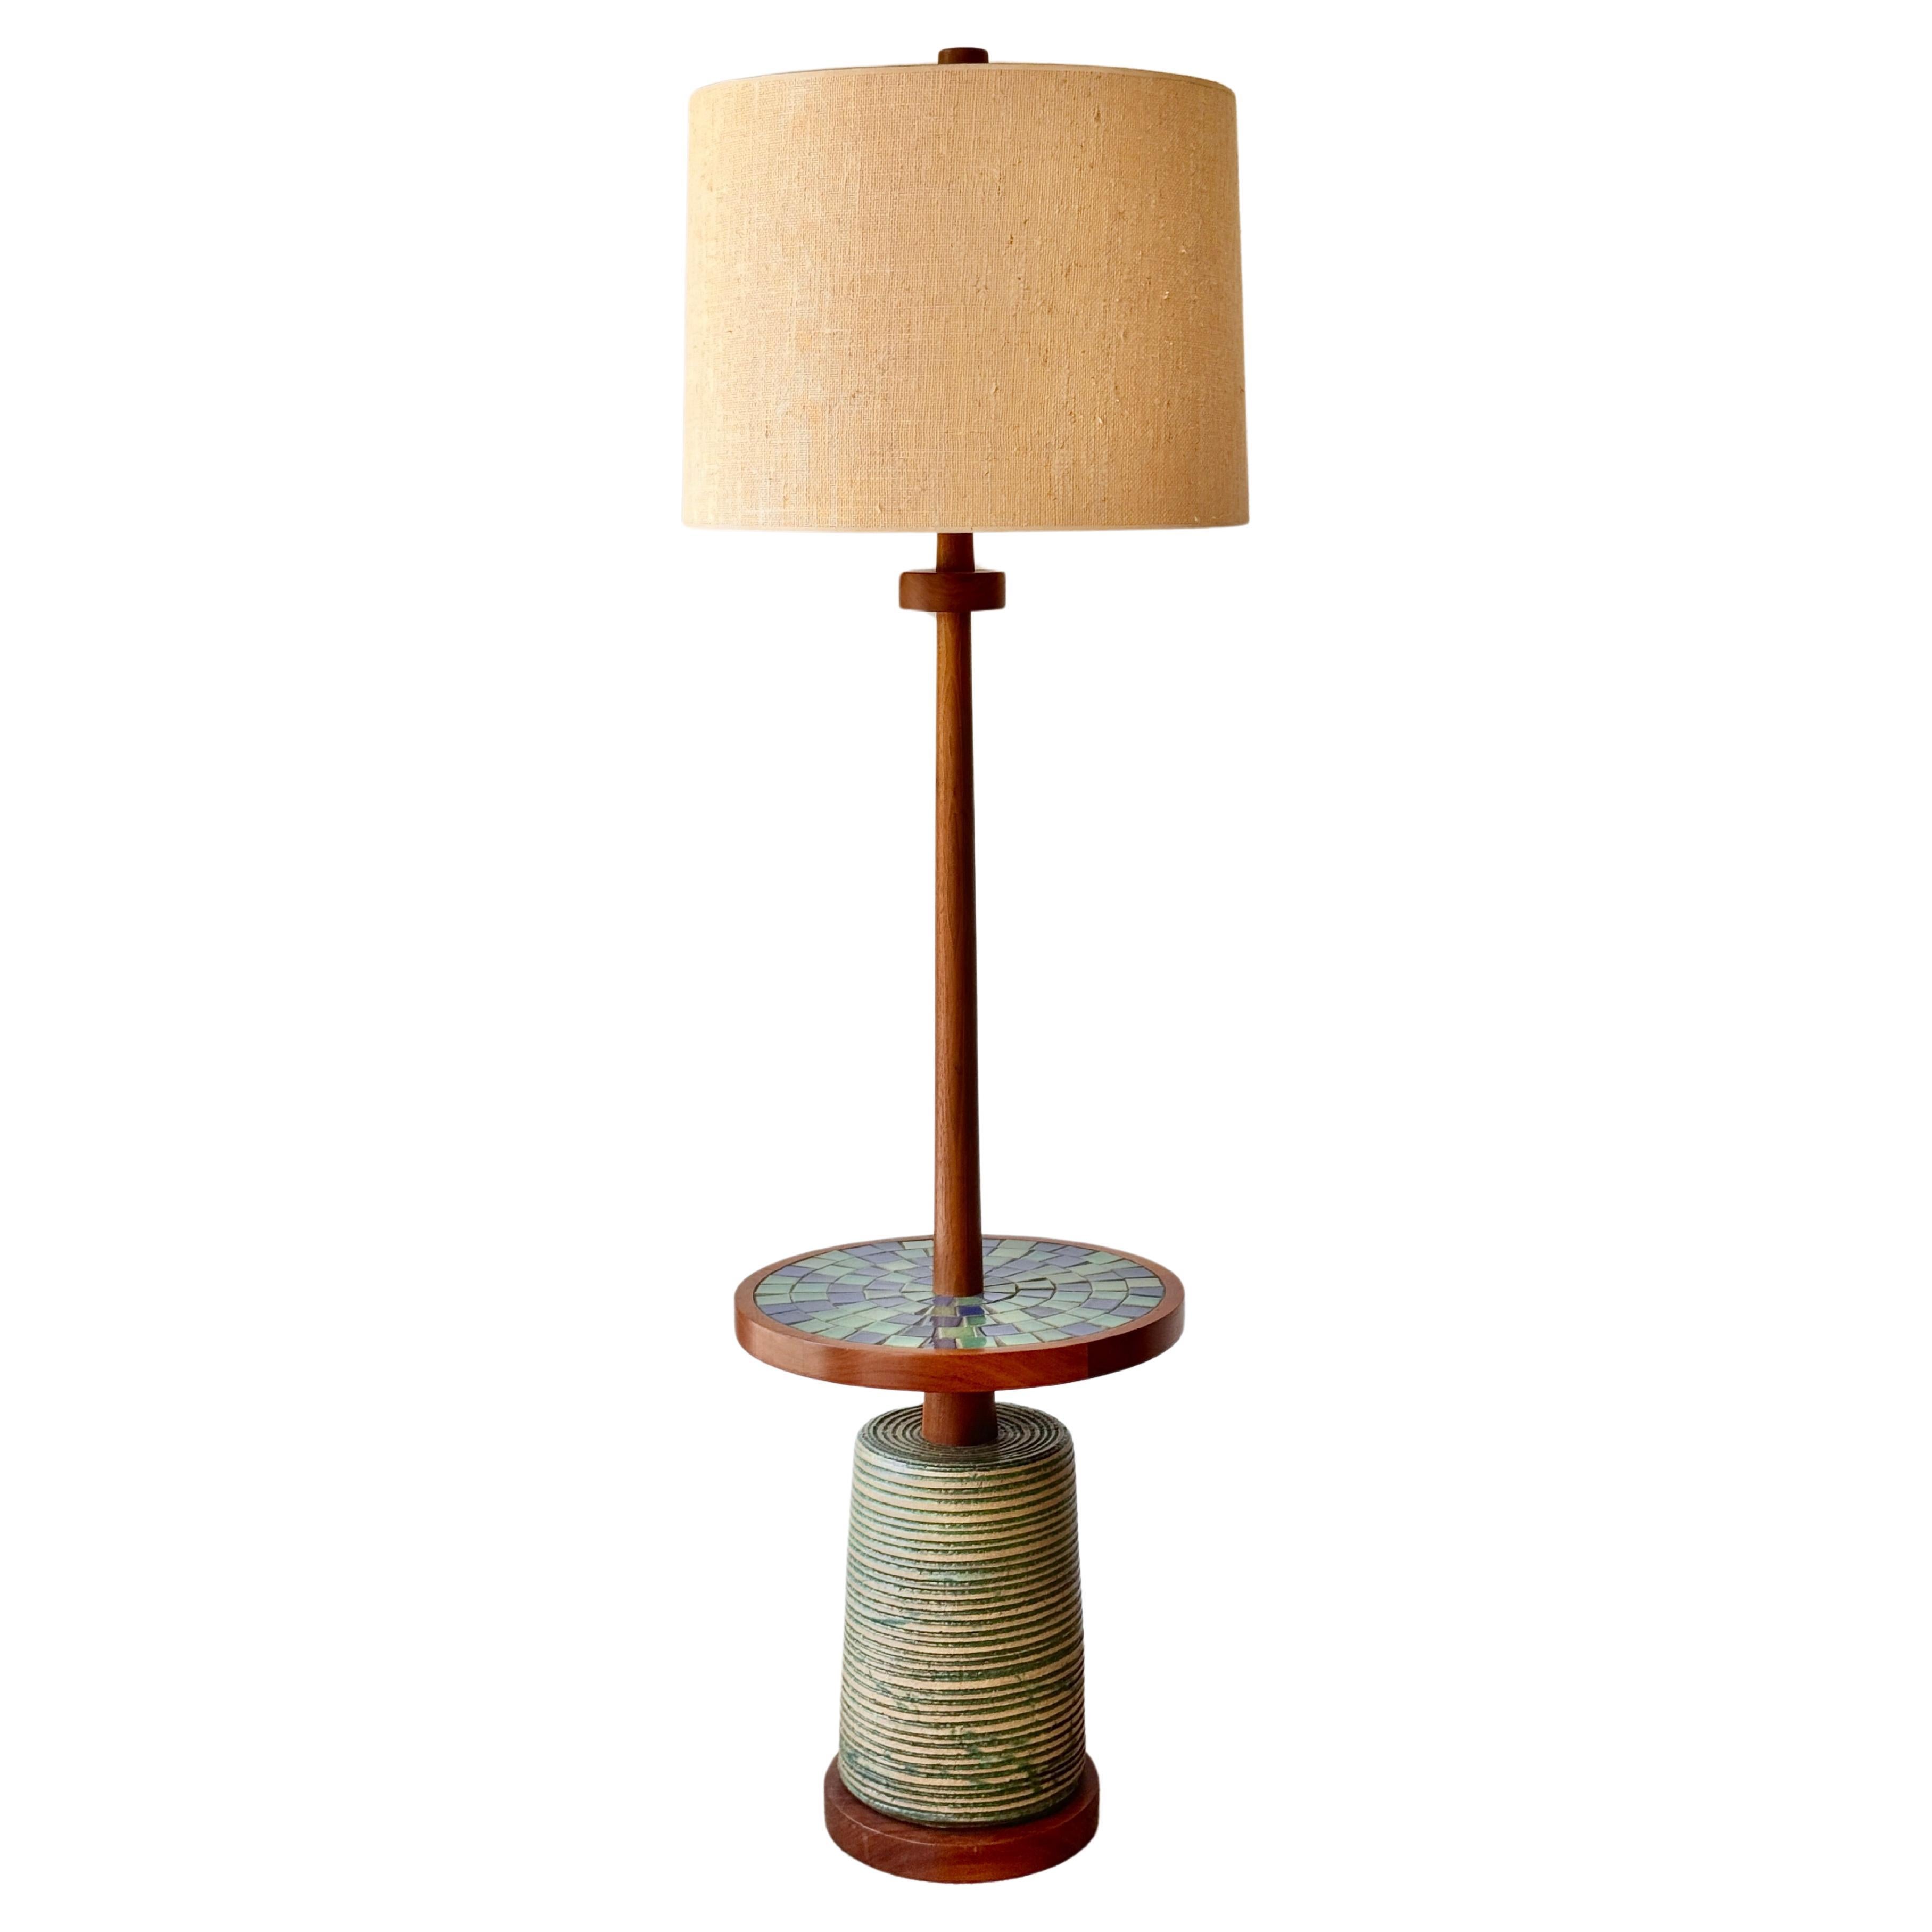 Rare Ceramic Floor Lamp w/ Mosaic Table by Gordon & Jane Martz Marshall Studios For Sale